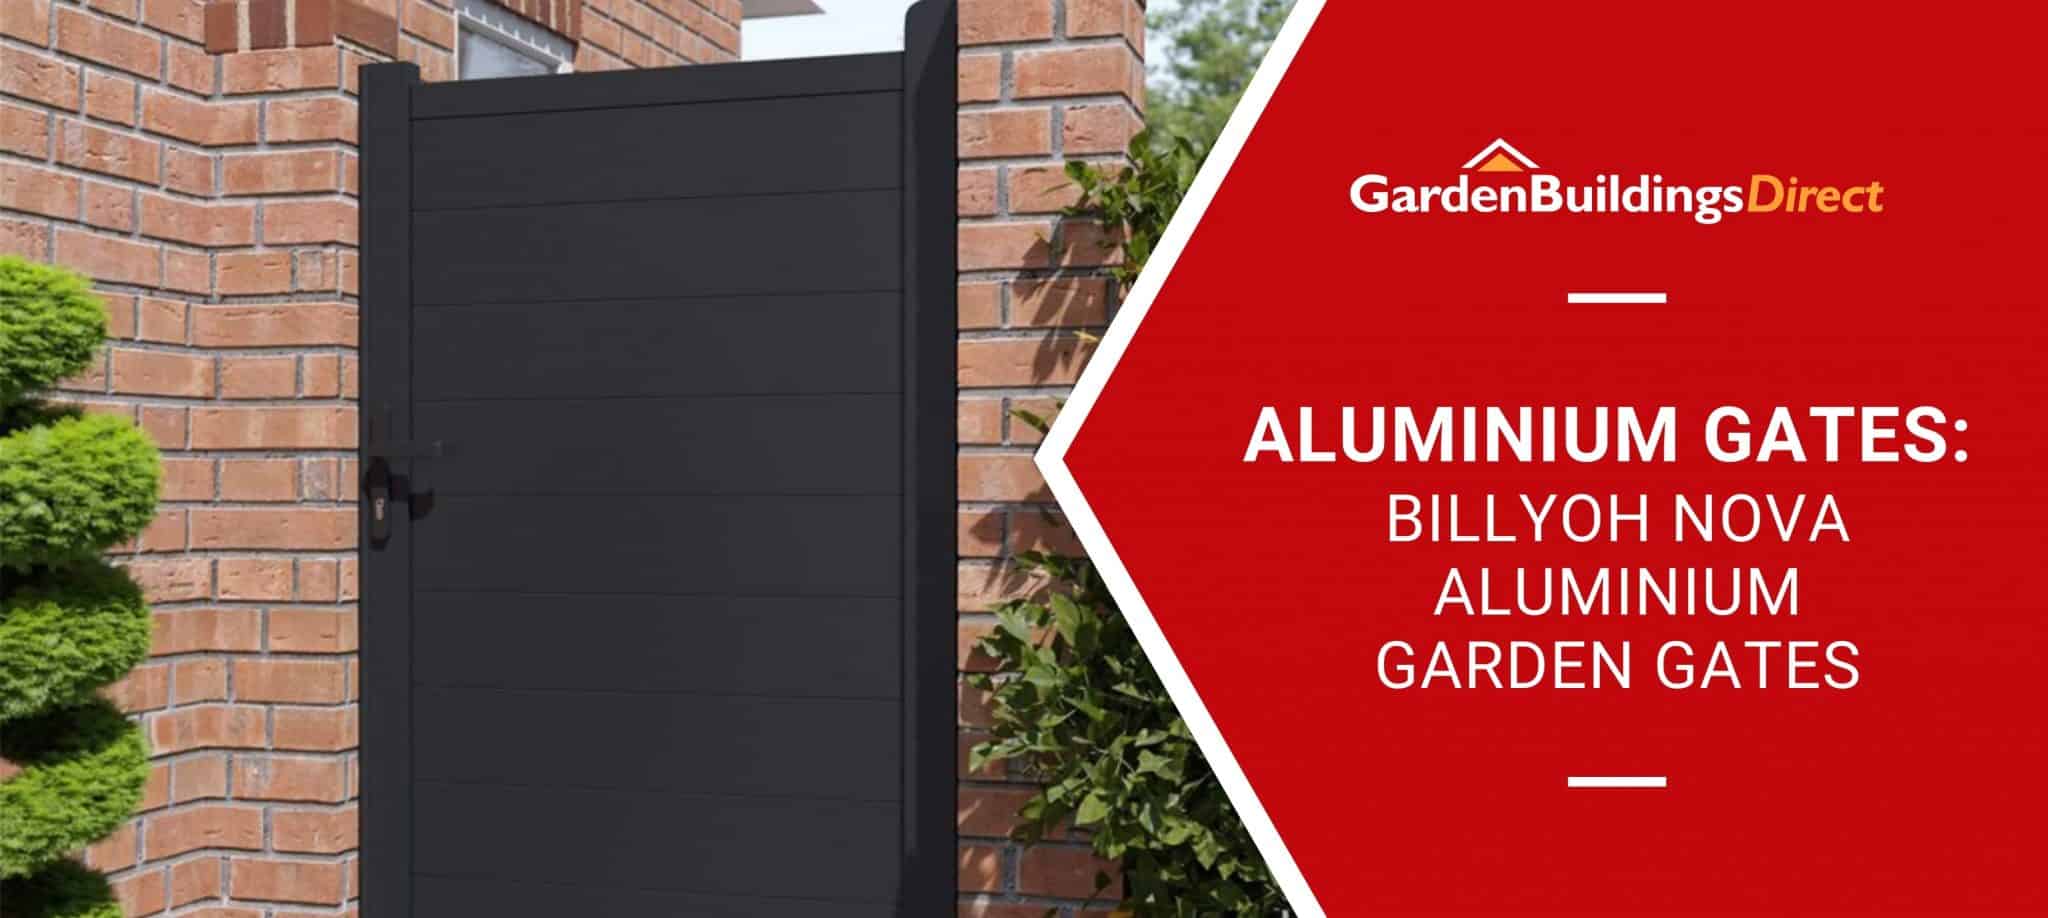 BillyOh Nova full privacy garden gate in black aluminium with Garden Buildings Direct logo and banner